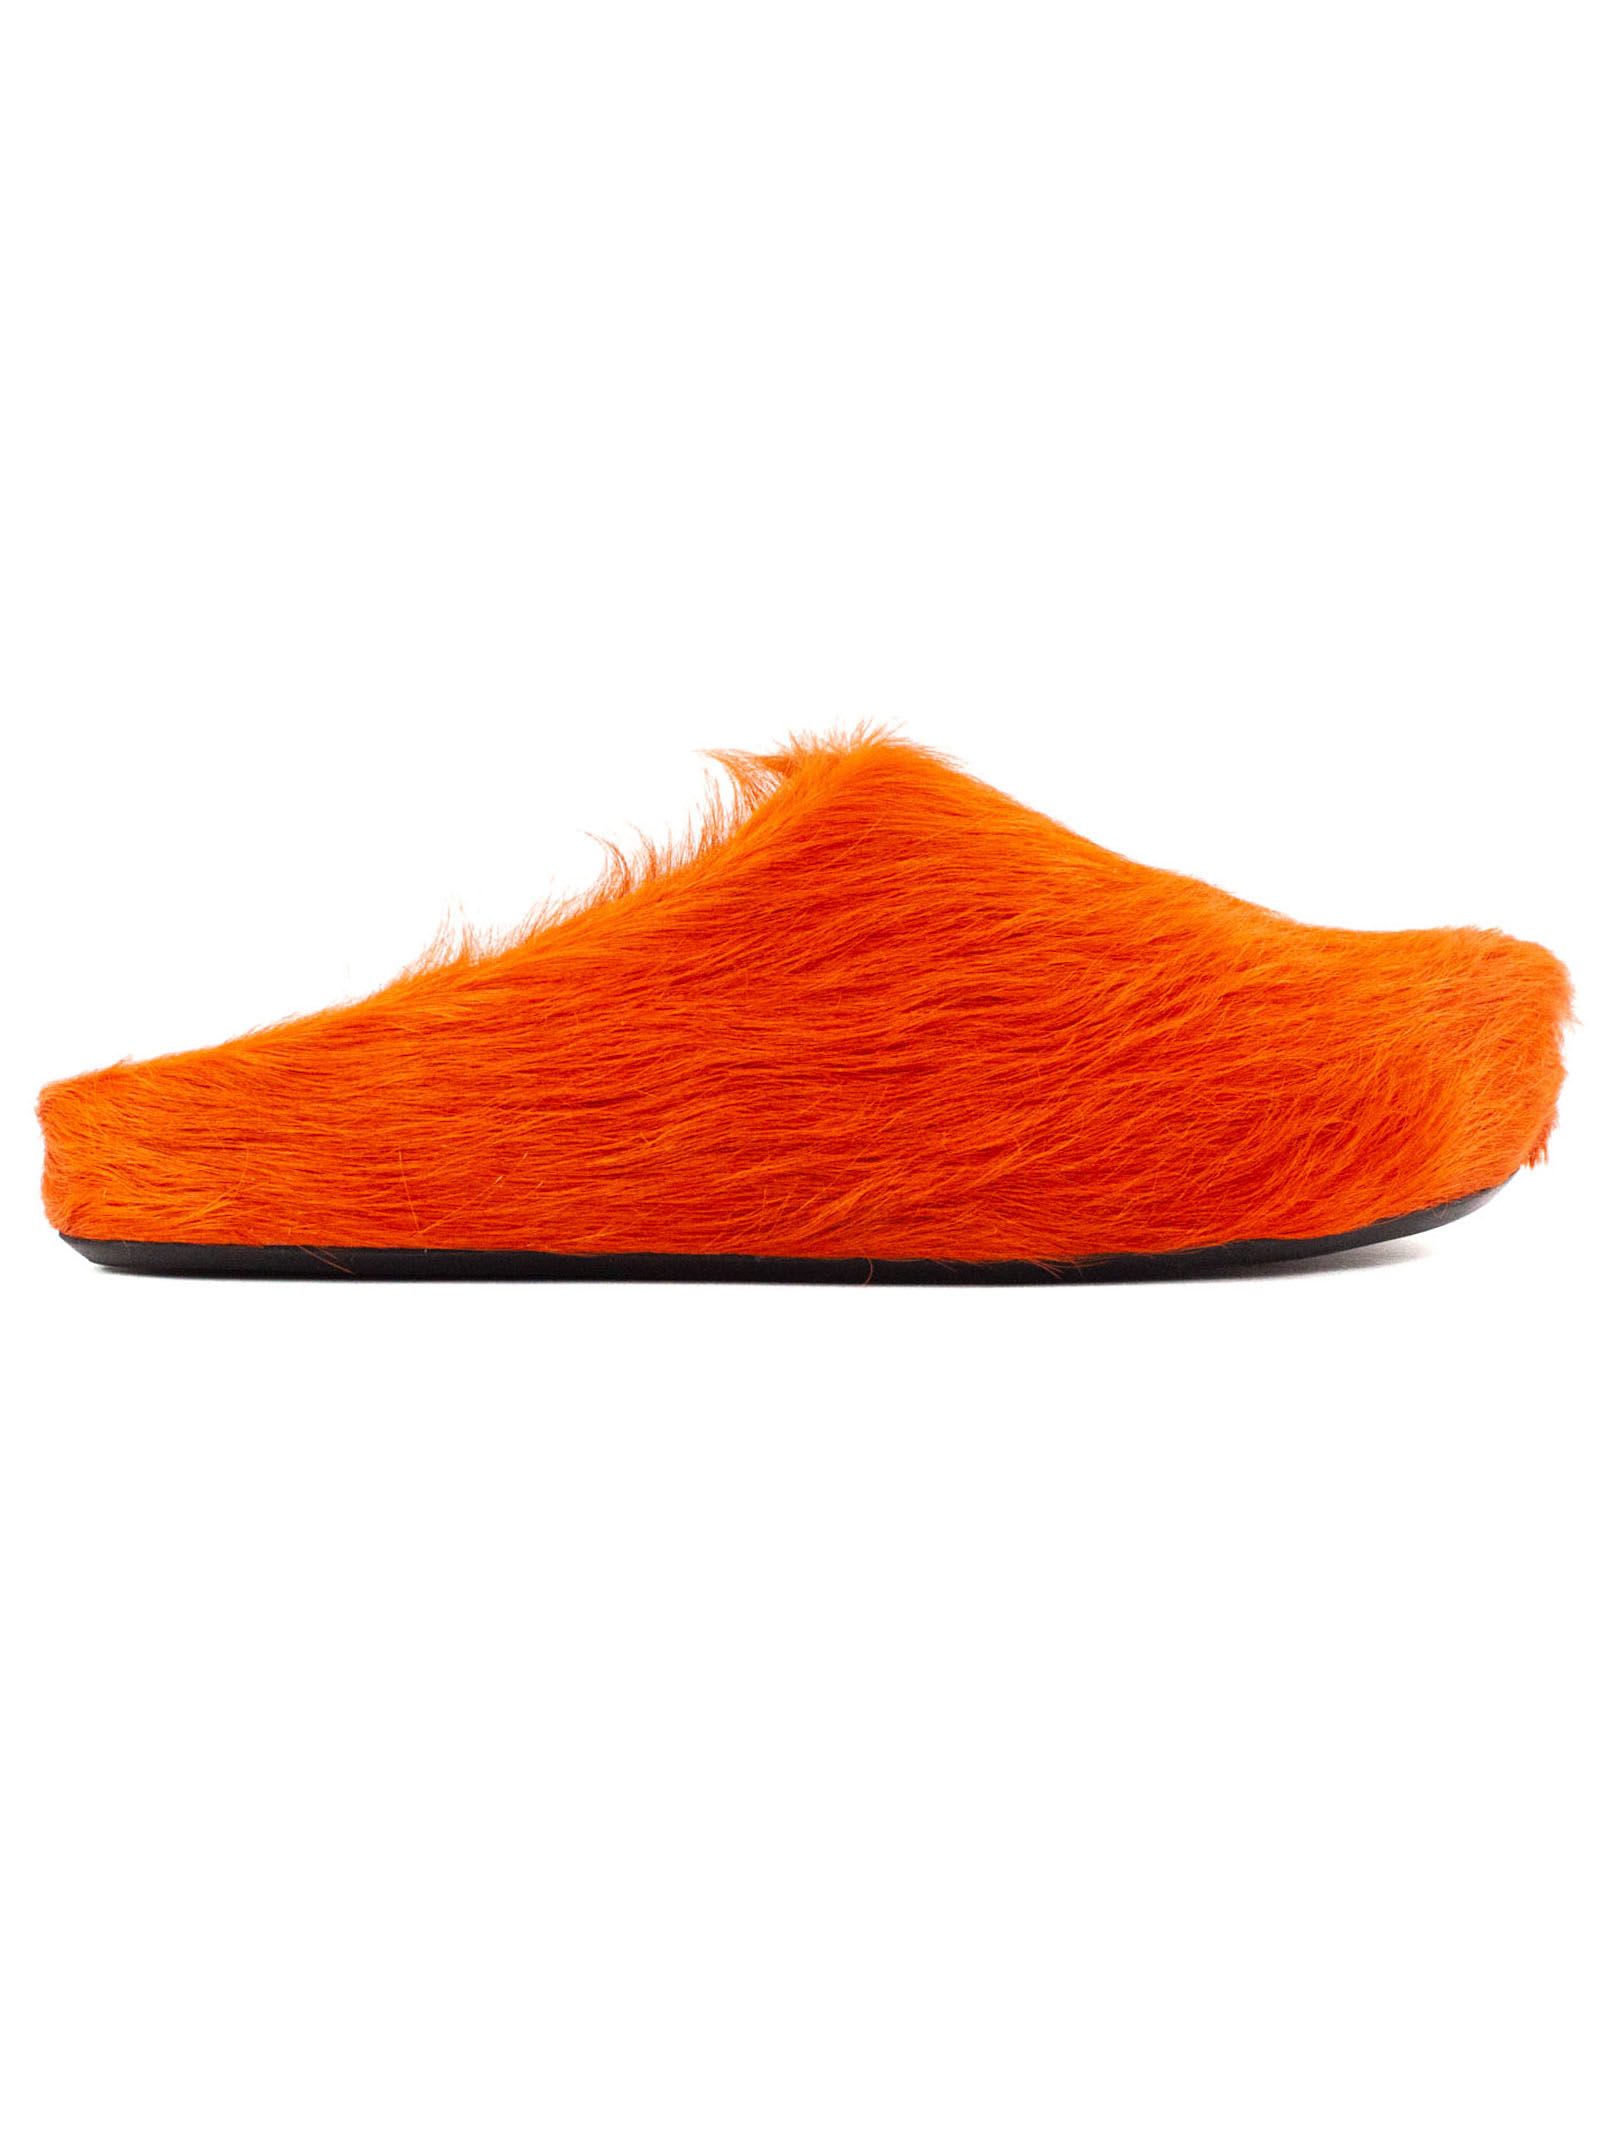 Marni Orange Textured Calf Hair Clog Slippers